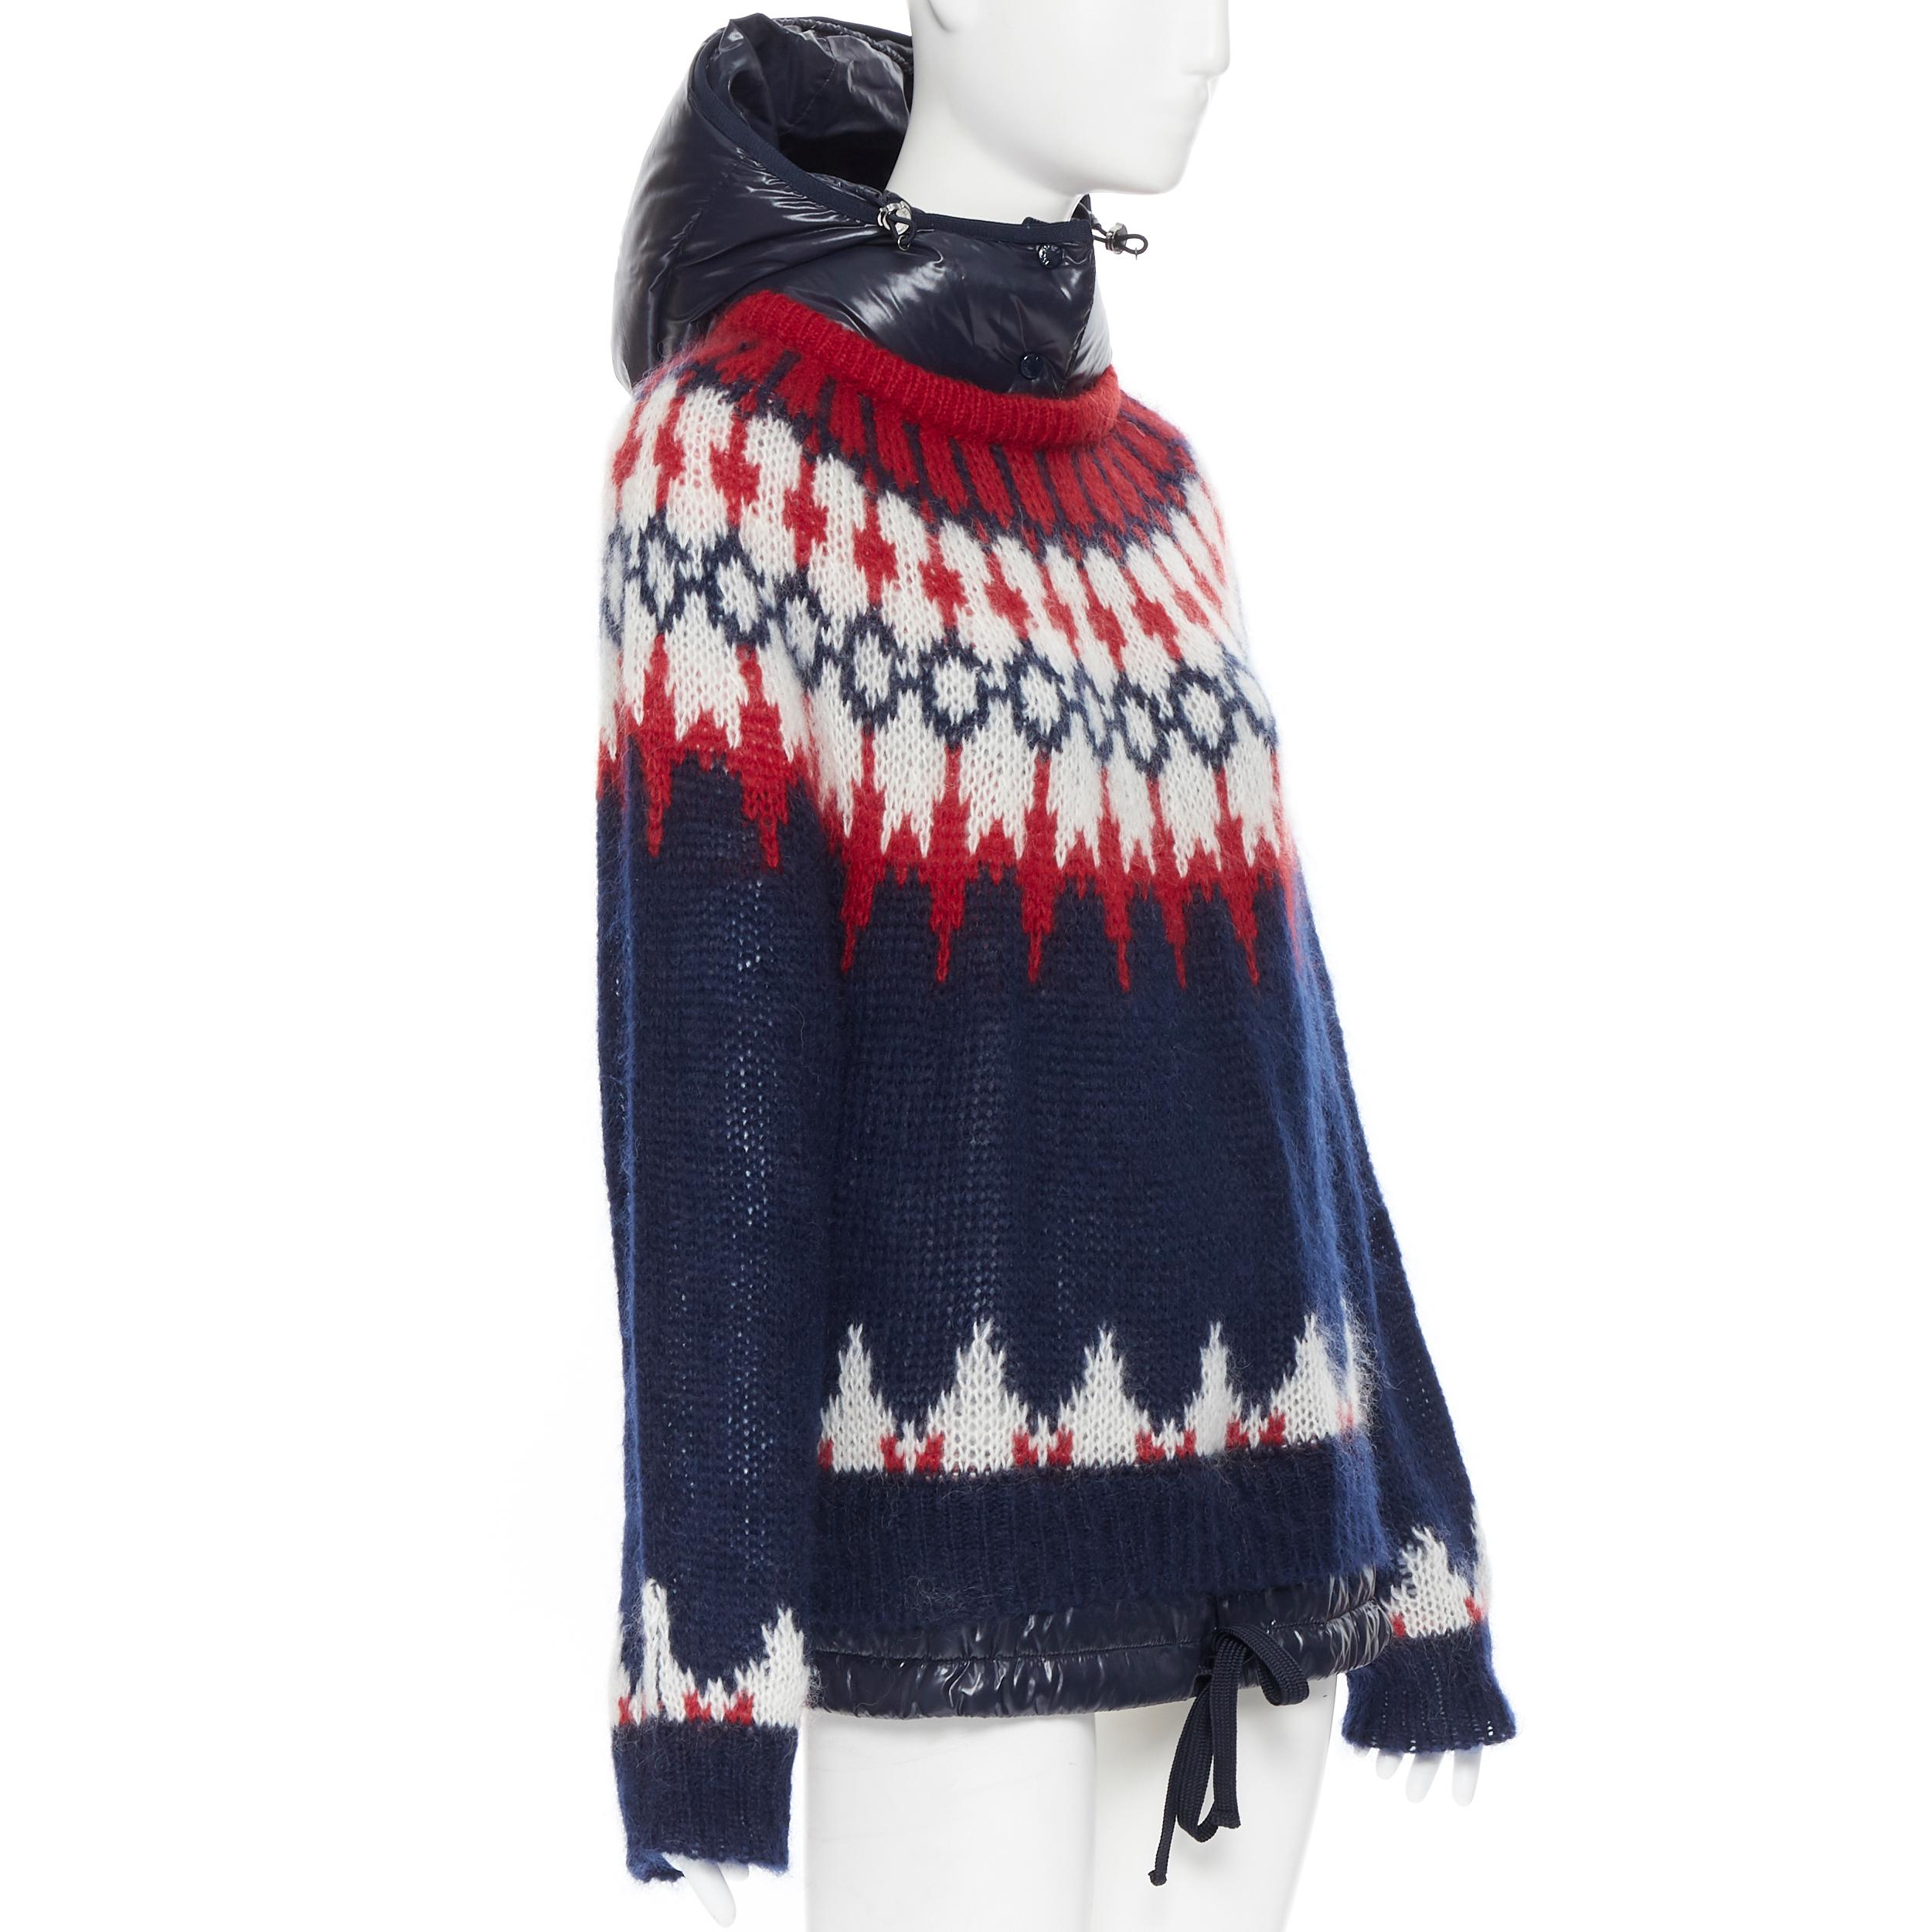 Black MONCLER navy white red fairisle knit detachable down puffer hood sweater XS